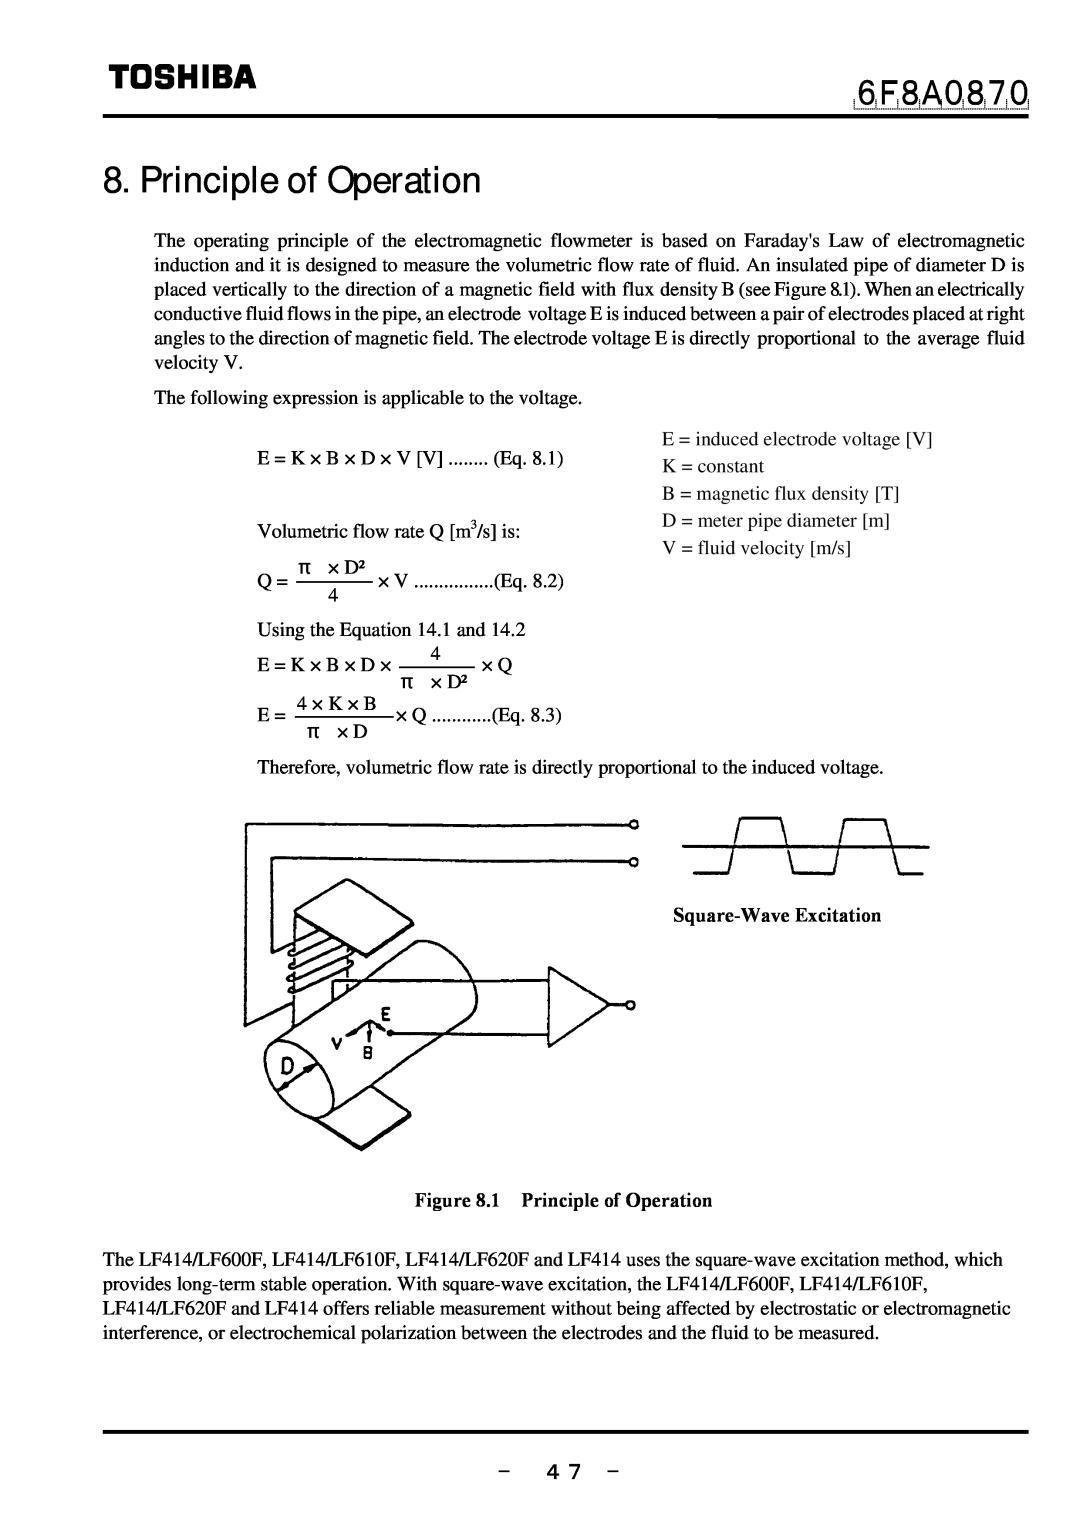 Toshiba LF414 manual － ４７ －, ６Ｆ８Ａ０８７０, Square-Wave Excitation .1 Principle of Operation 